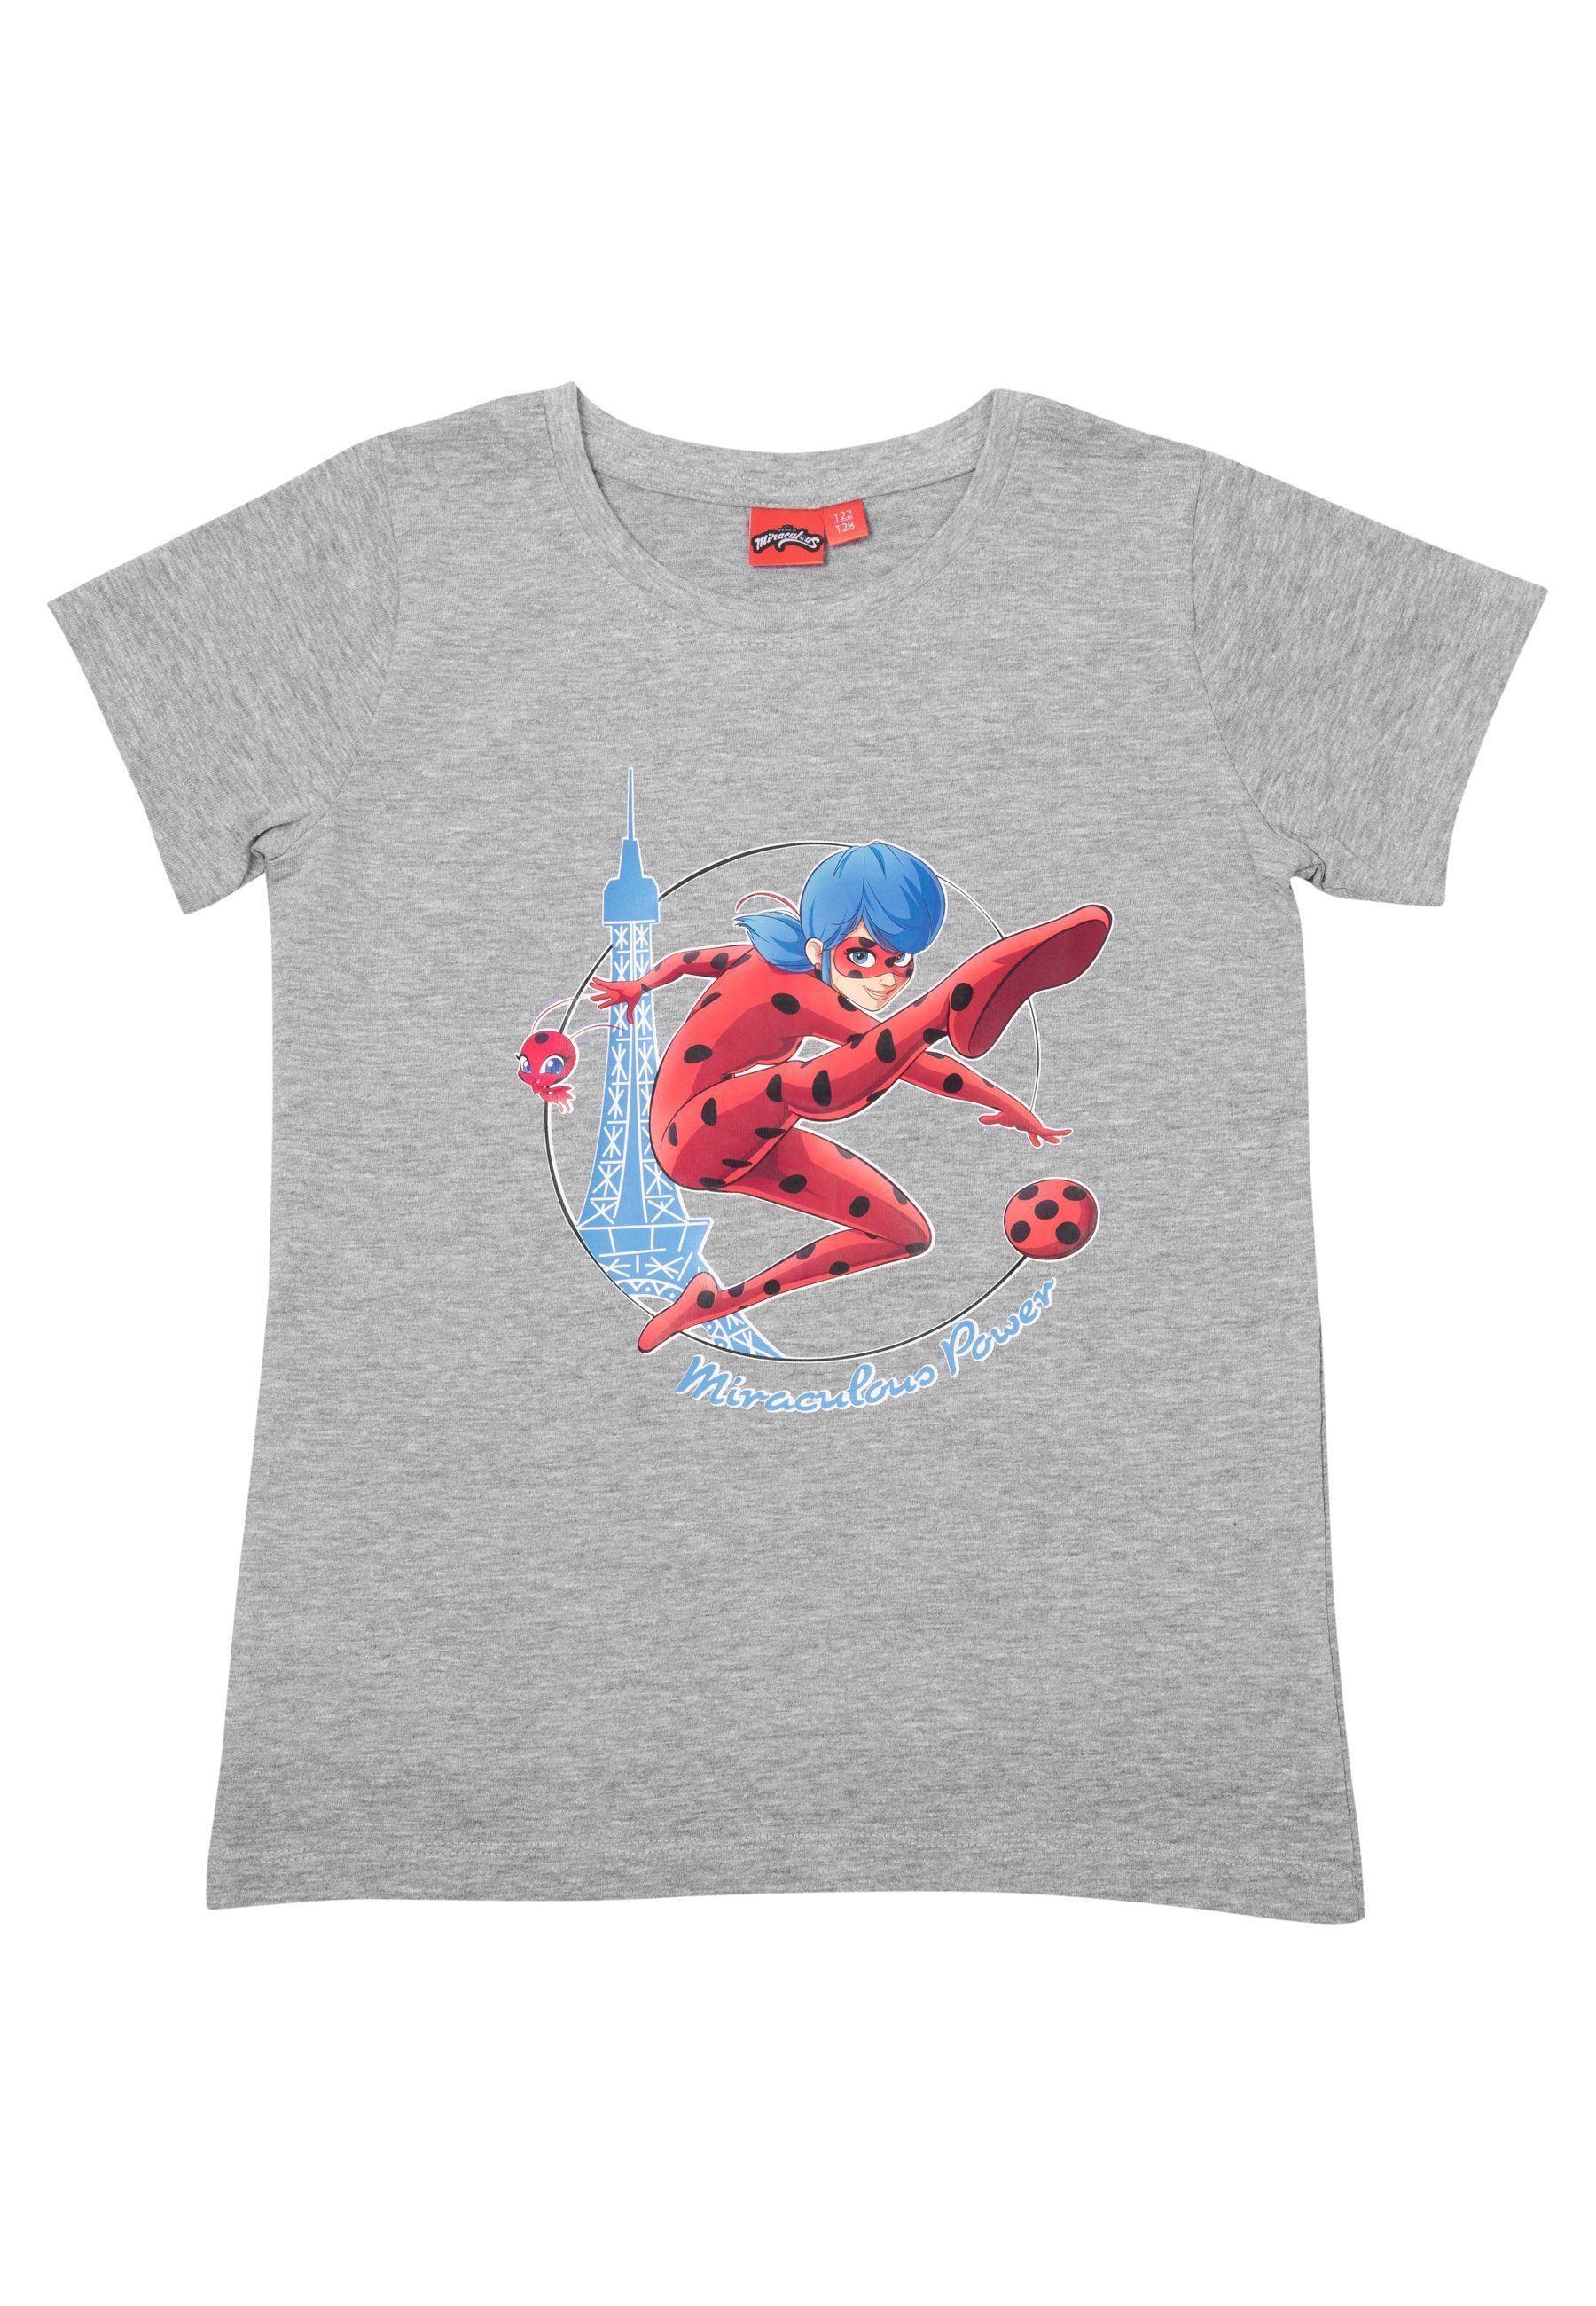 United Labels® Schlafanzug Miraculous Pyjama Kurzarm Grau/Rot Set Mädchen Ladybug Schlafanzug